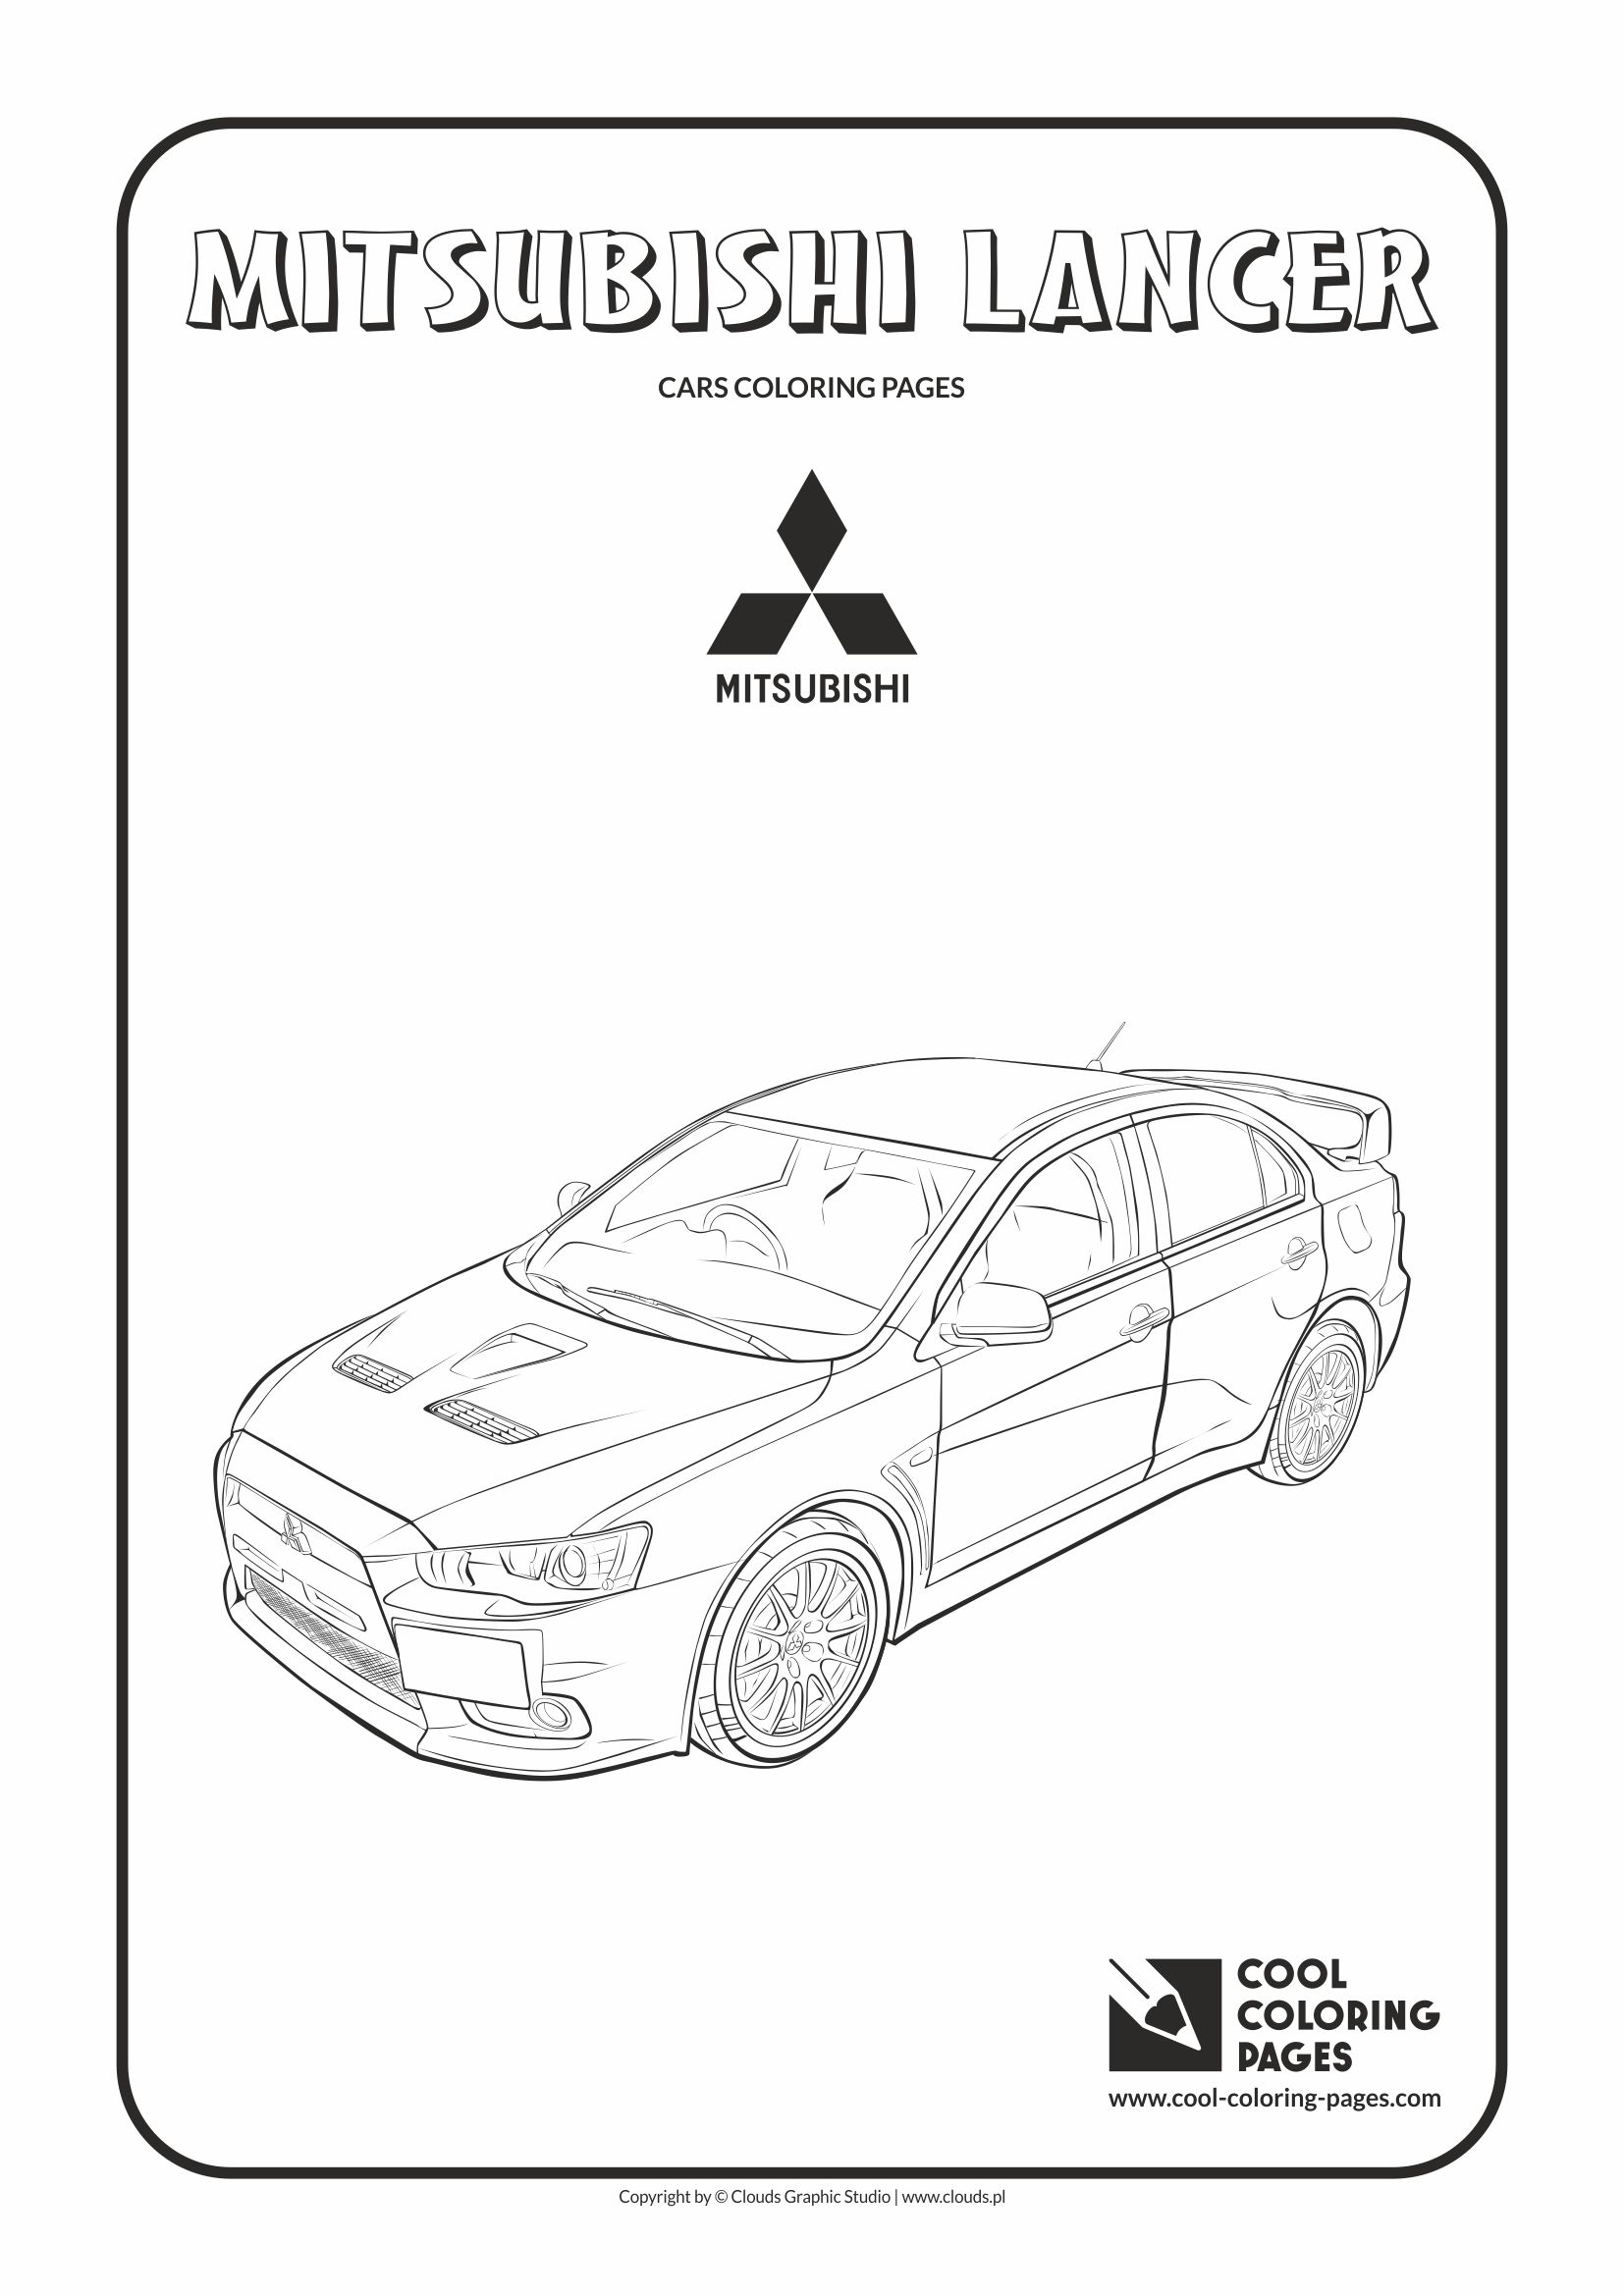 Cool Coloring Pages - Vehicles / Mitsubishi Lancer / Coloring page with Mitsubishi Lancer